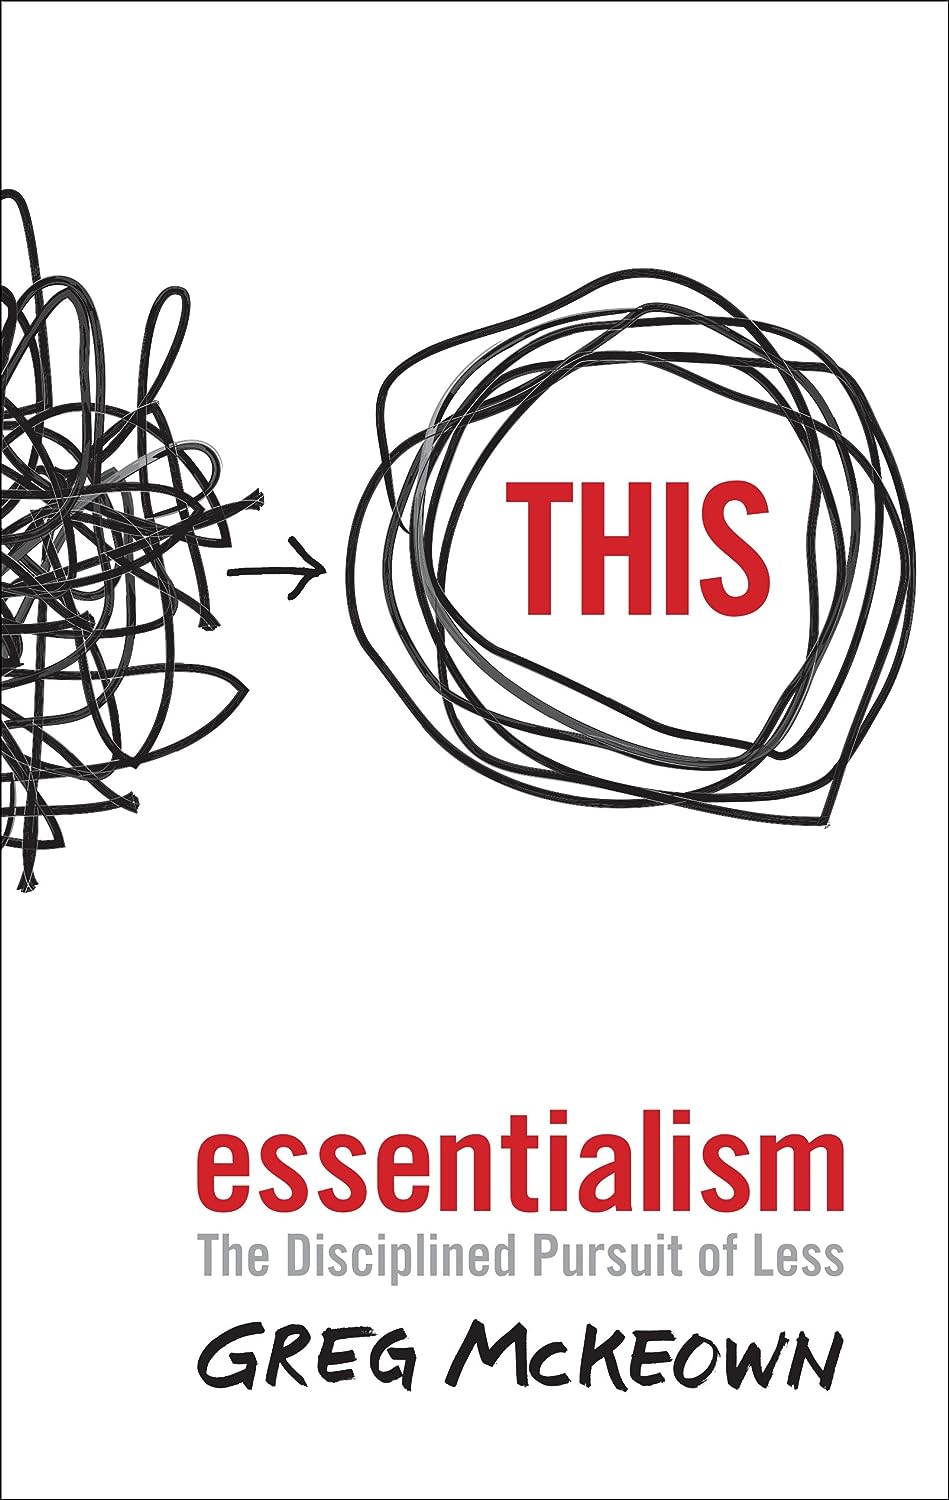 Book cover "Essentialism" by Greg McKeown